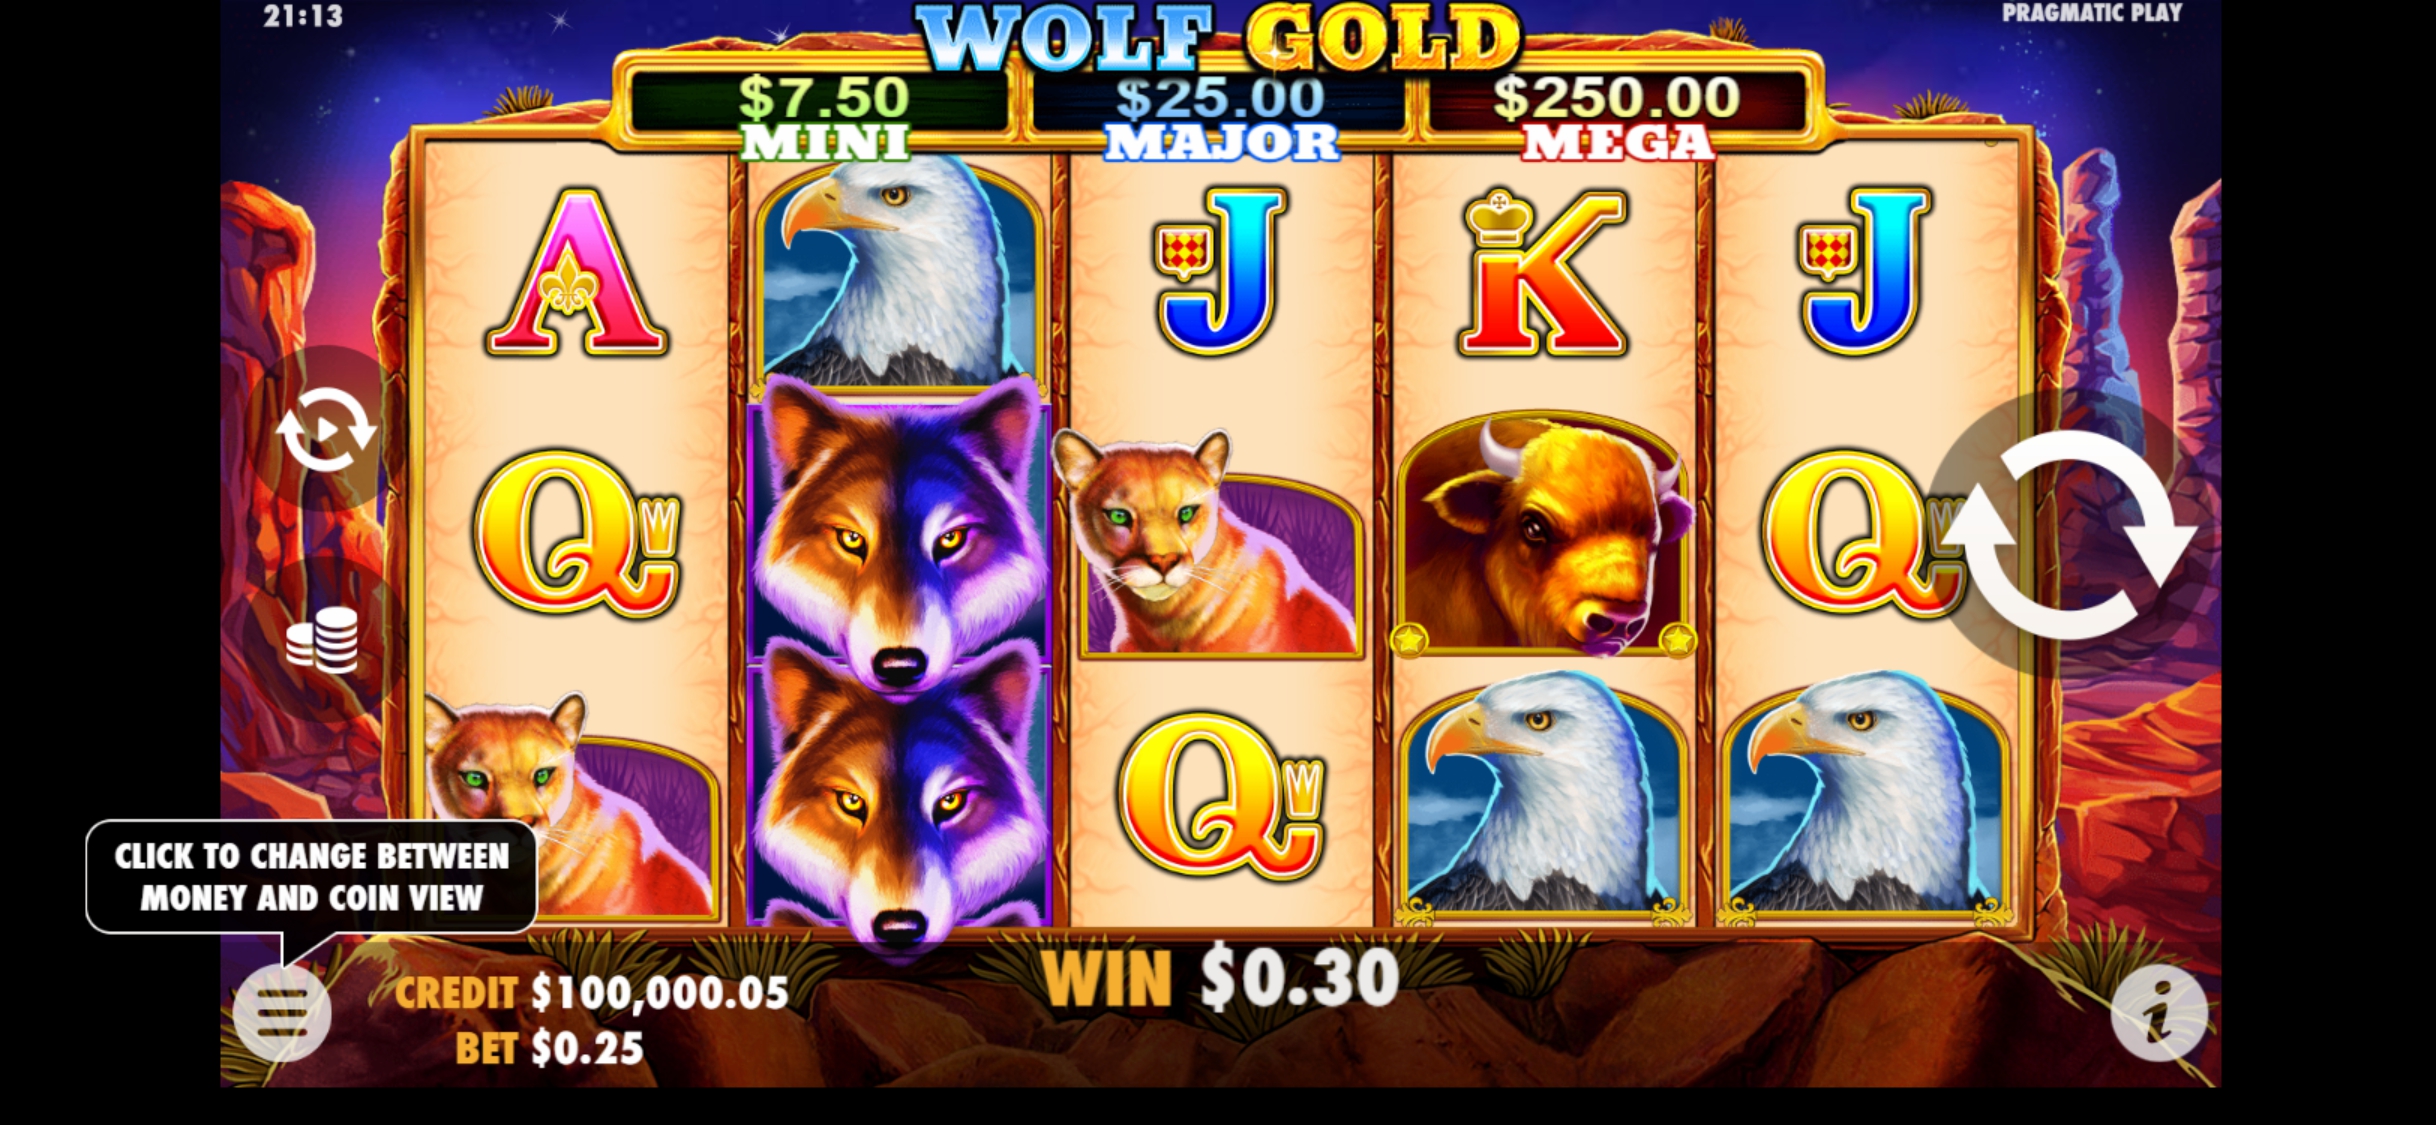 Black Diamond Casino Mobile Slot Games Review